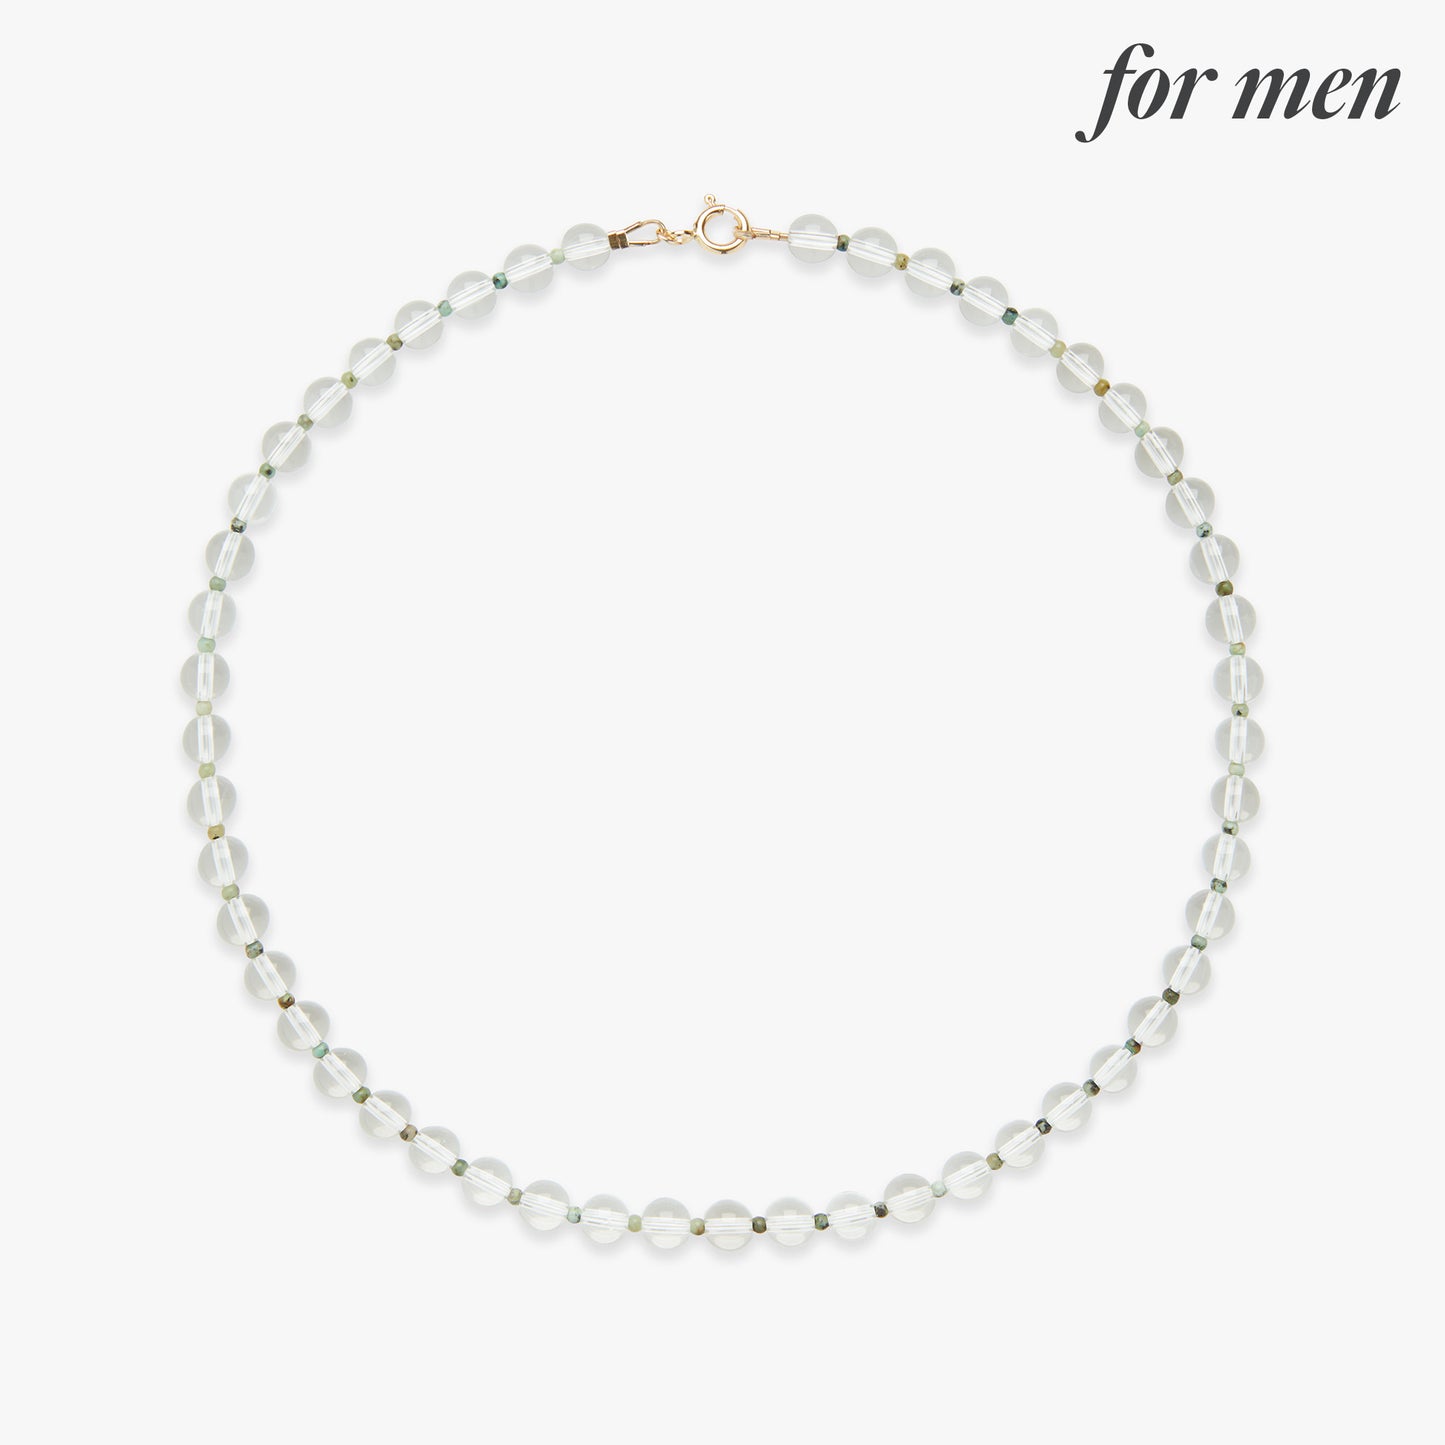 Iced matcha gemstone necklace gold filled for men